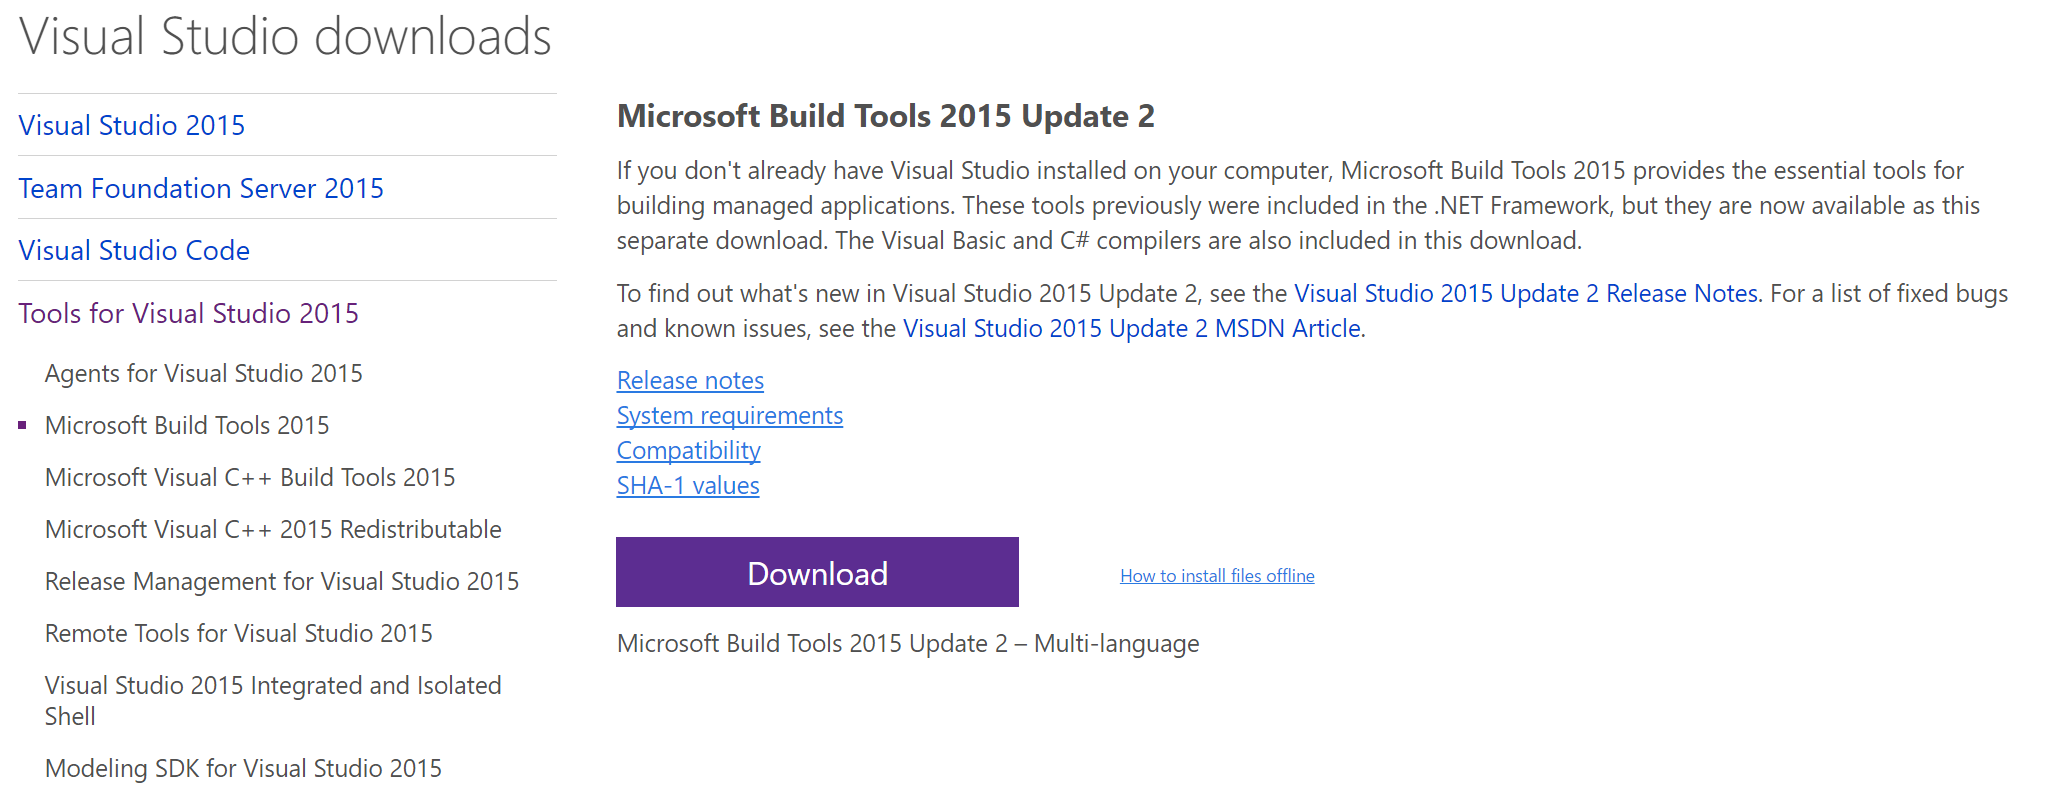 VisualStudio.com Microsoft Build Tools Download Page